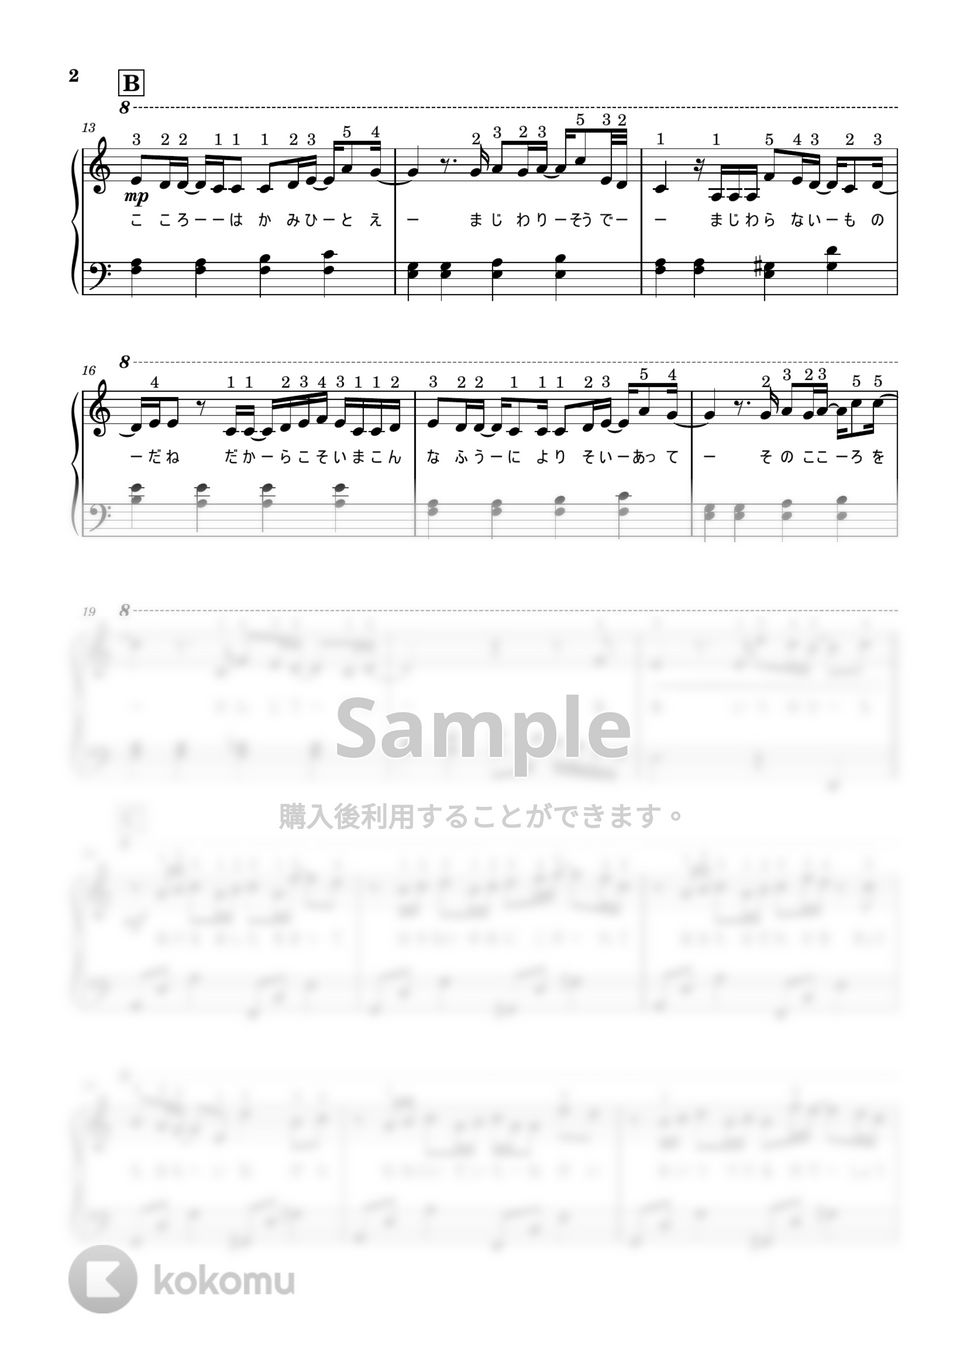 Uru - 紙一重/初級 (ハ長調/歌詞付き/指番号付き/地獄楽/ピアノ) by reo piano